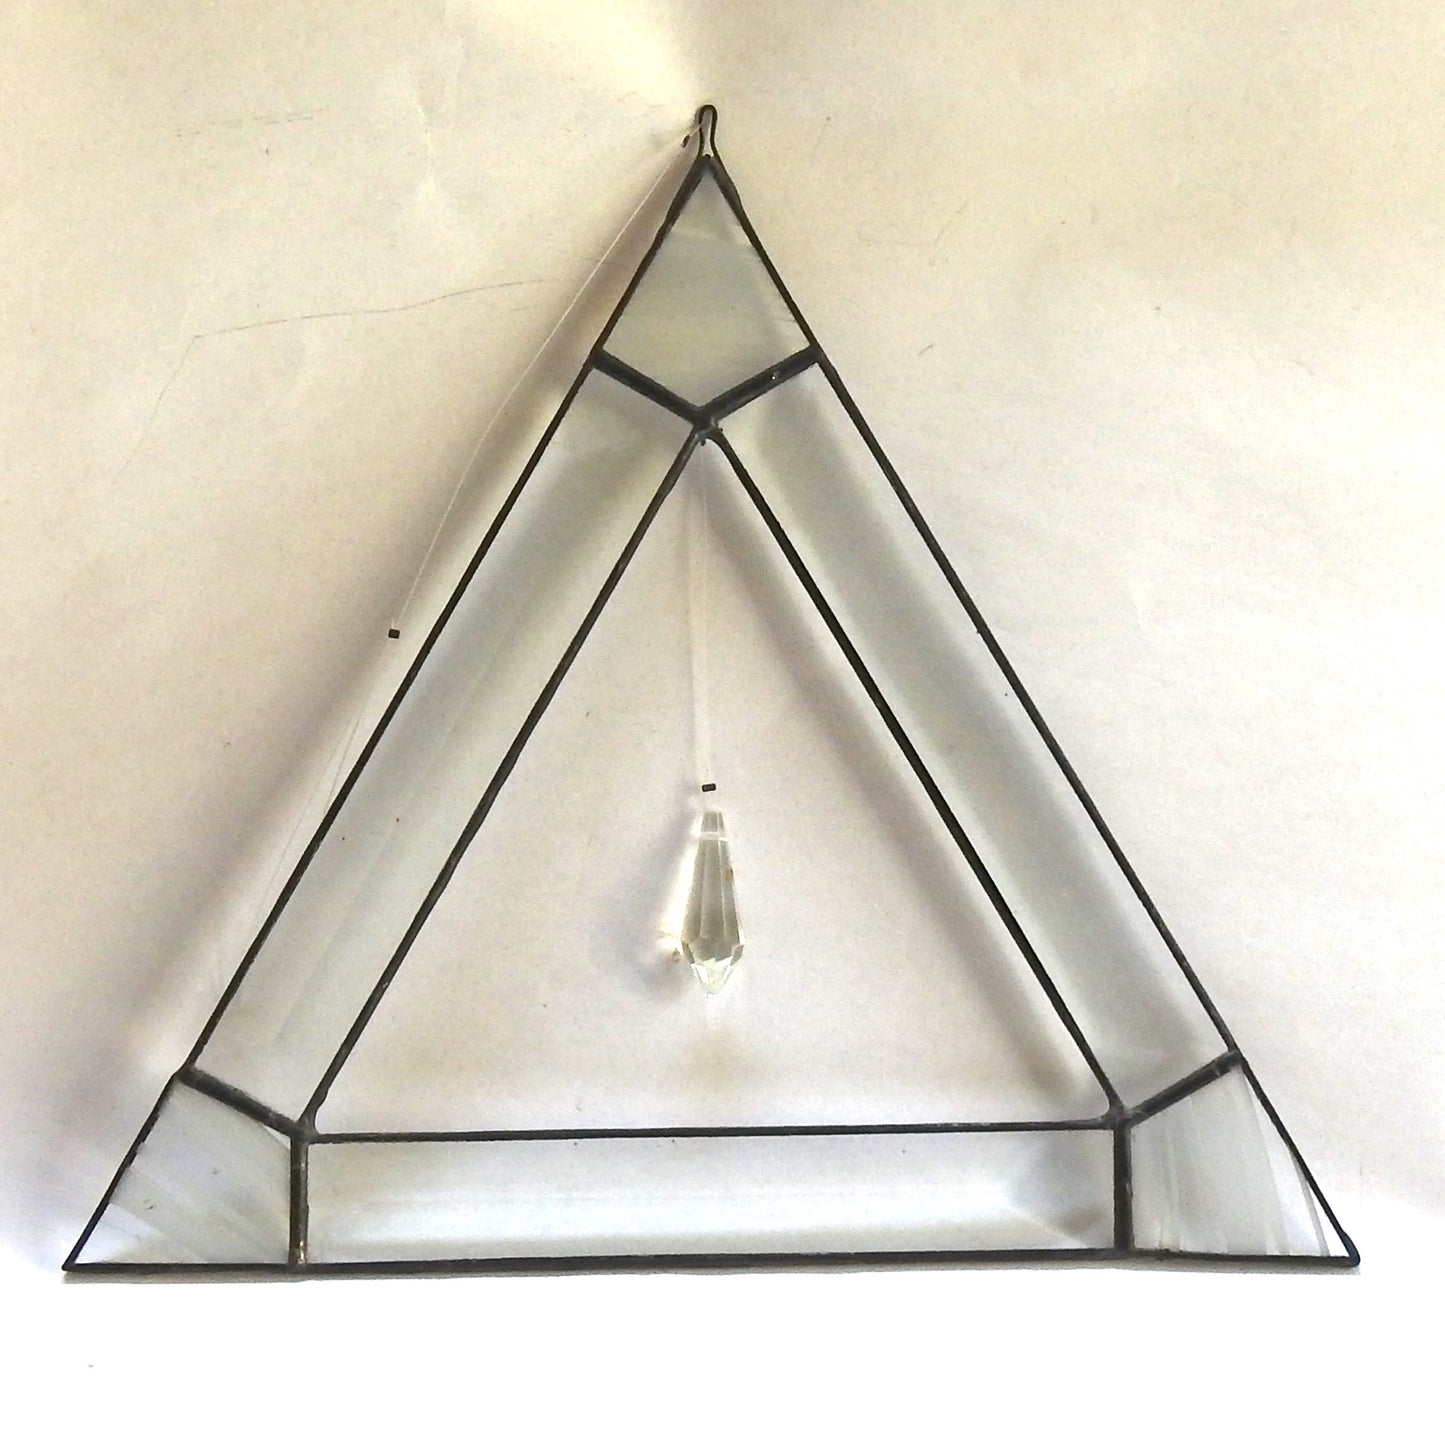 Beveled triangle with prism - medium